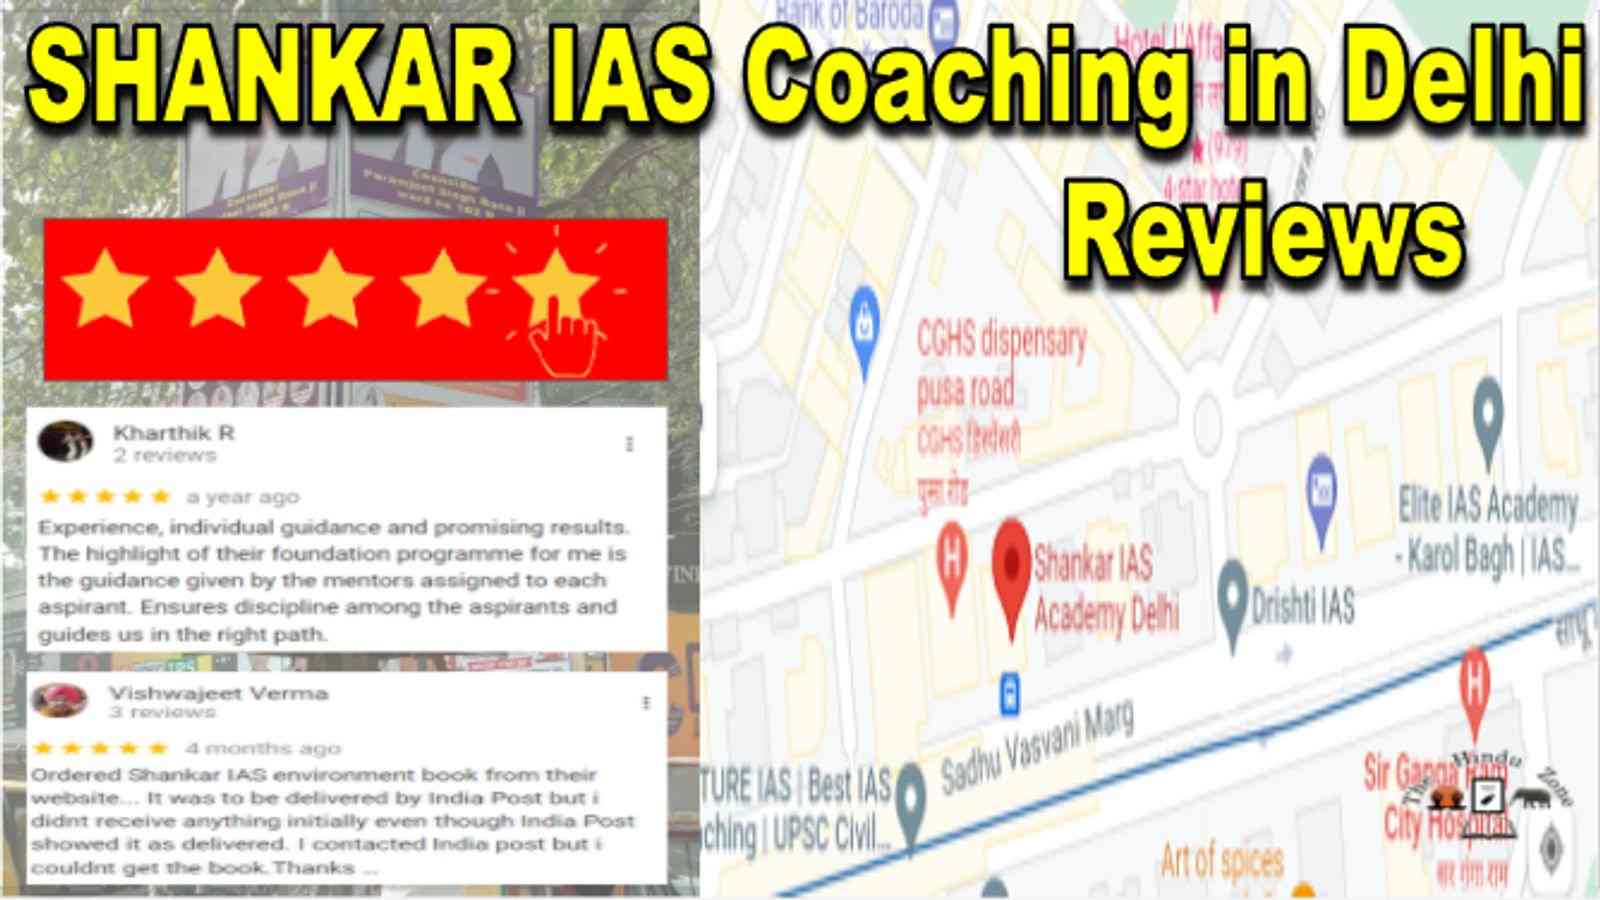 Shankar IAS Coaching in Delhi Reviews